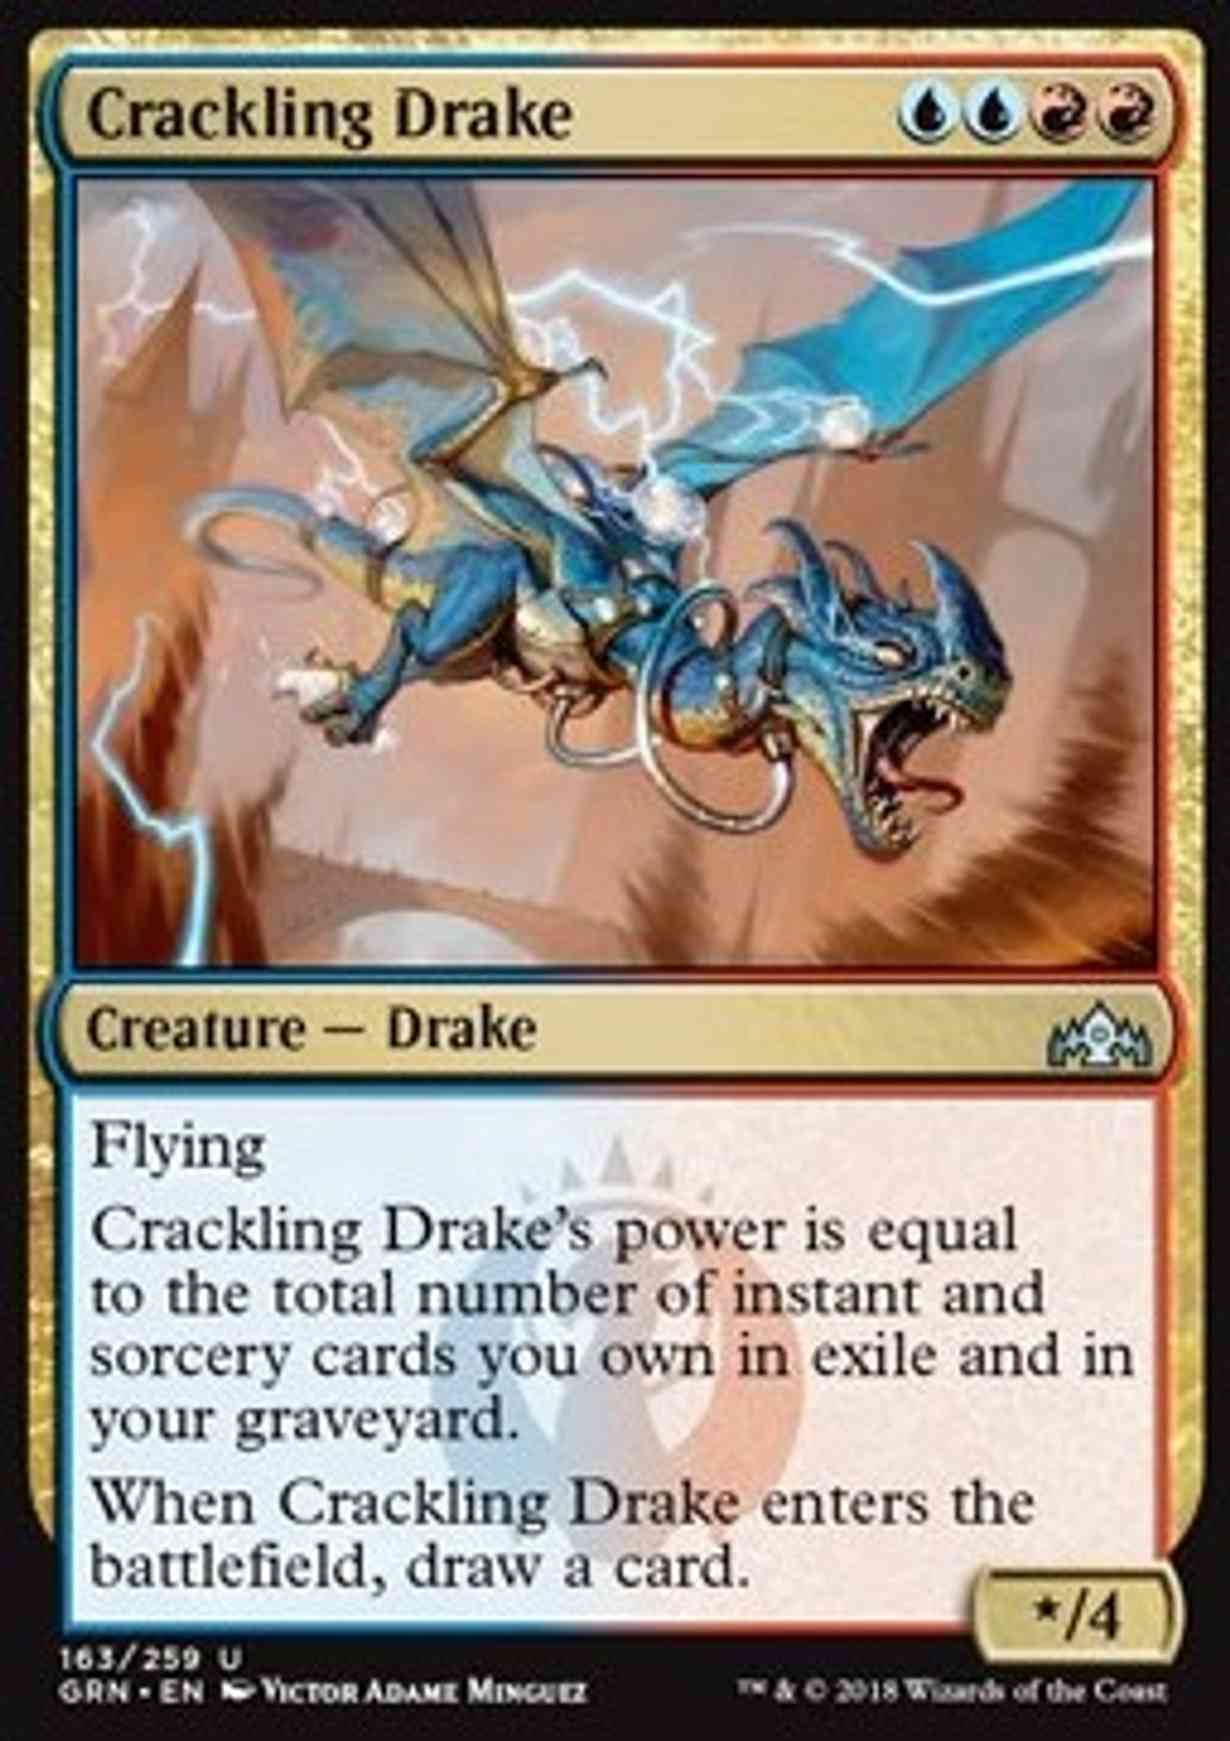 Crackling Drake magic card front